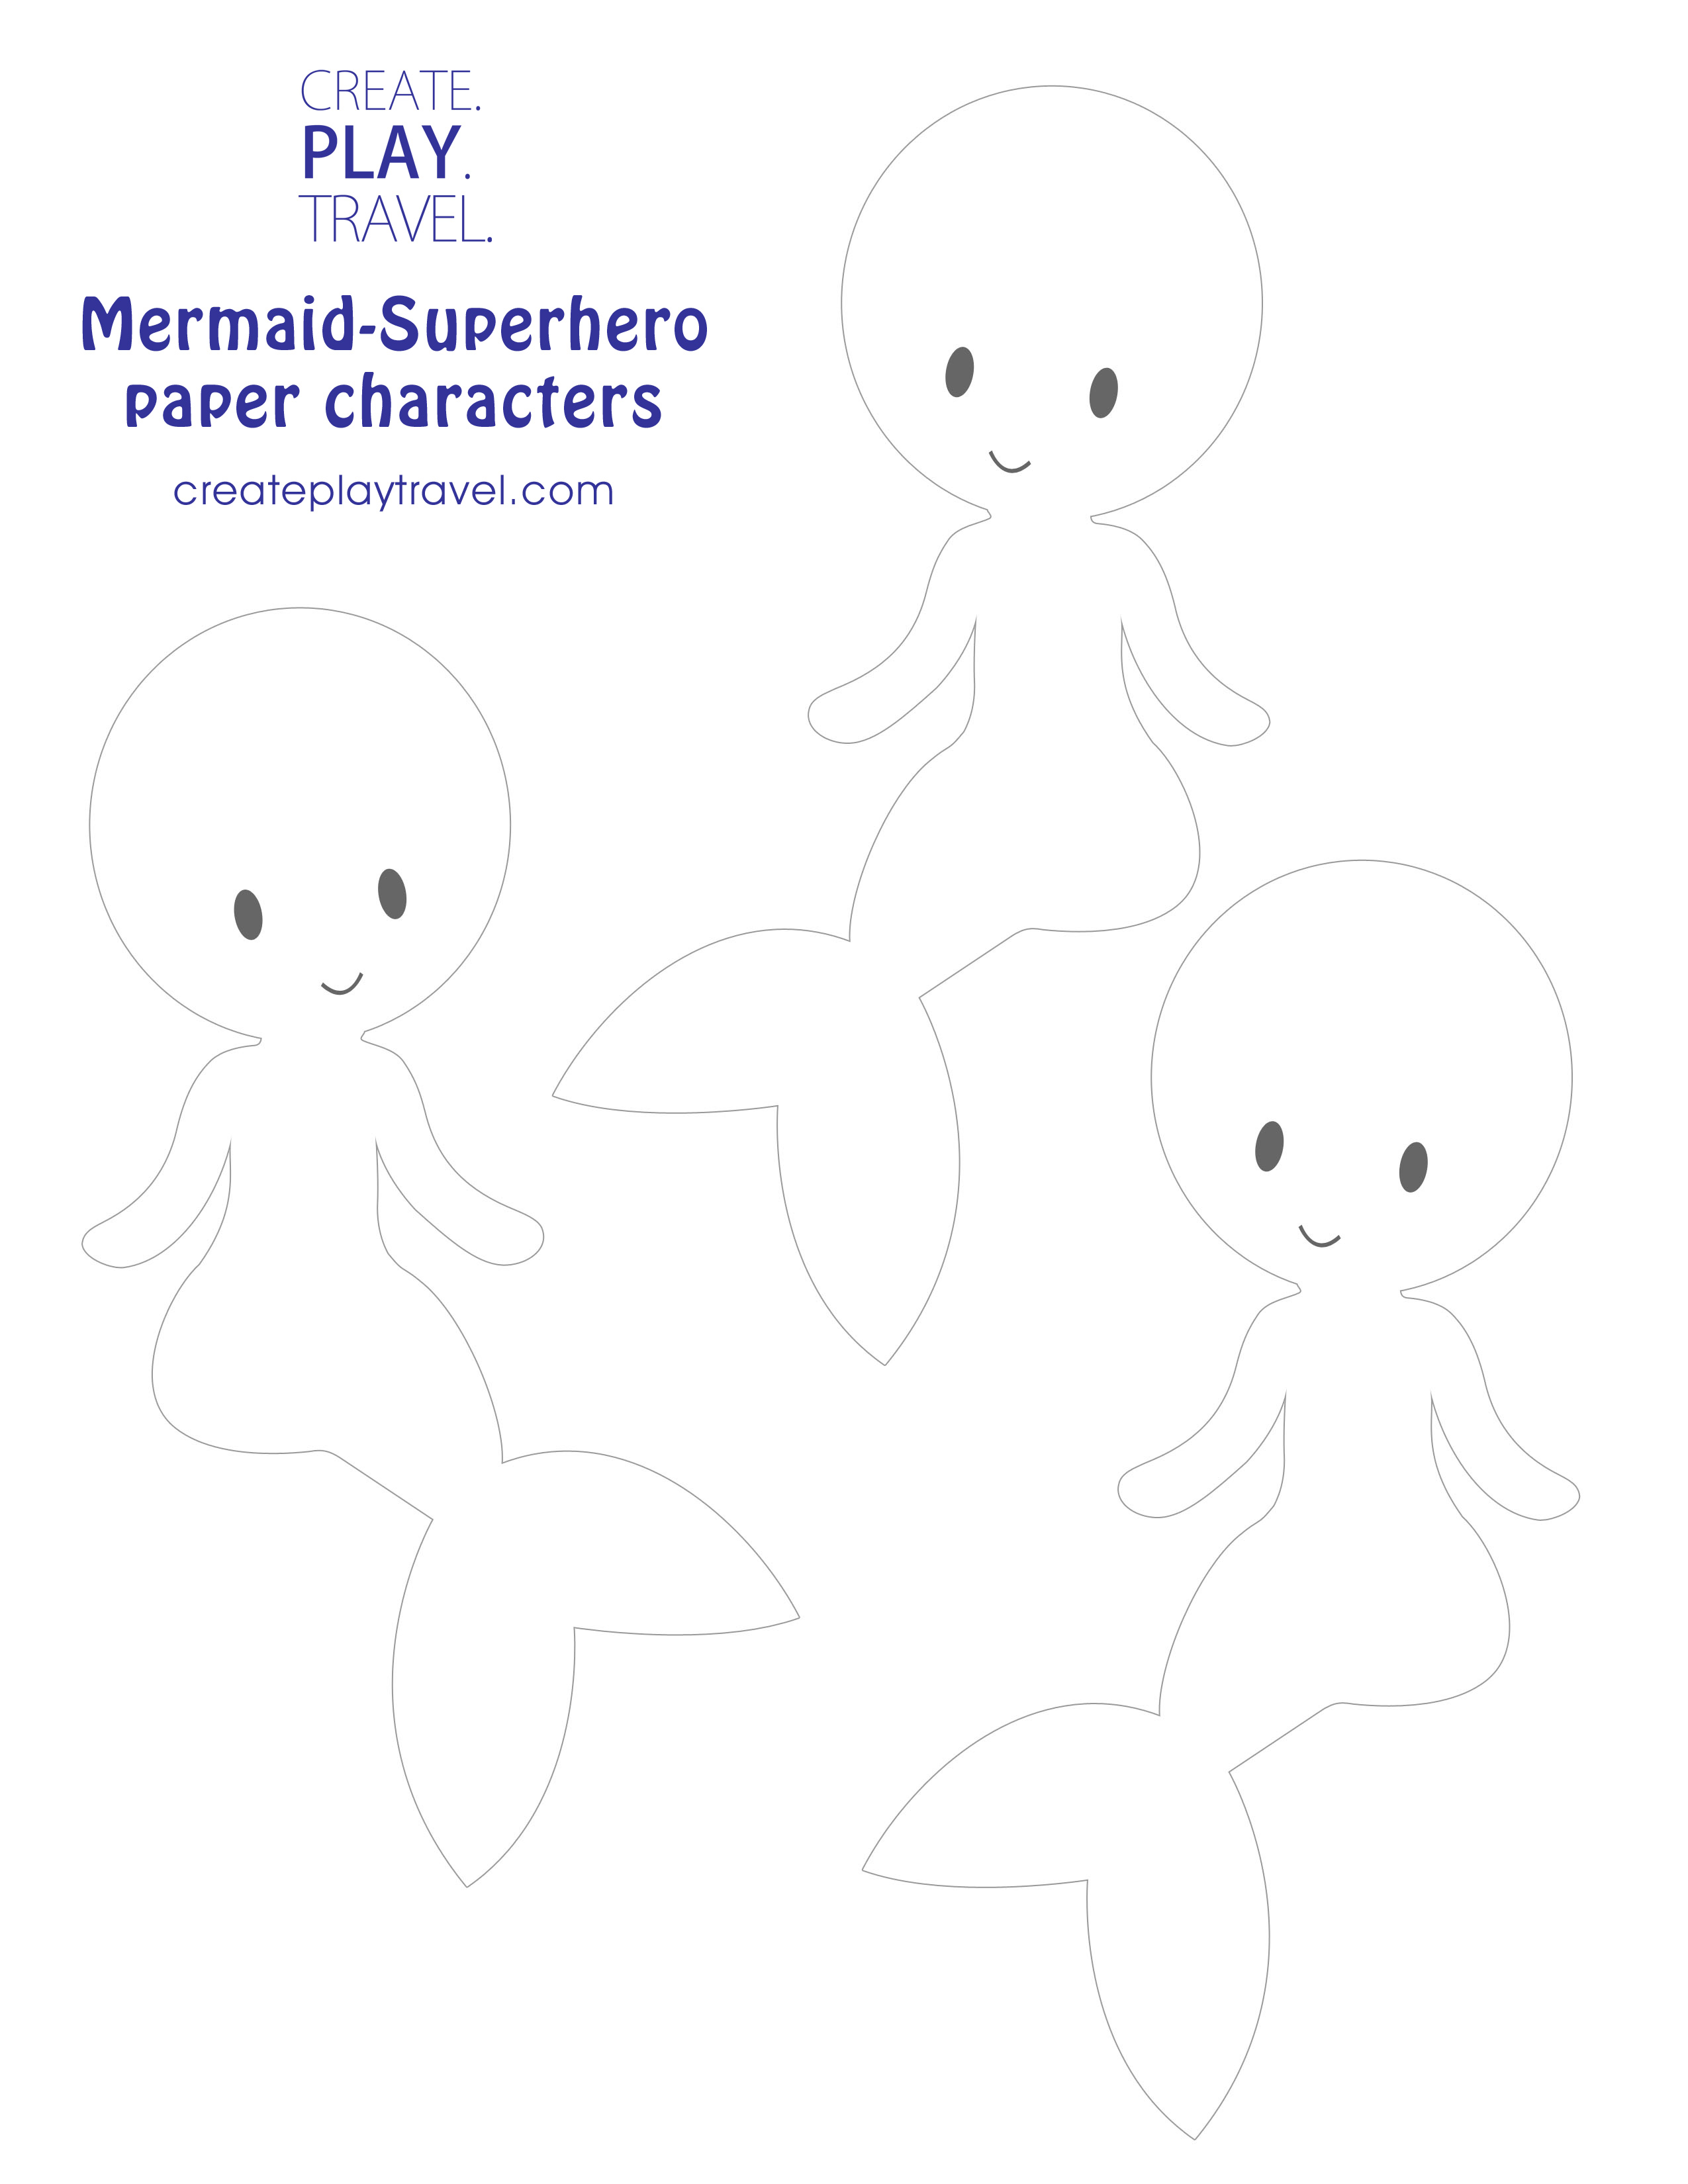 Superhero-Mermaid paper character printable template